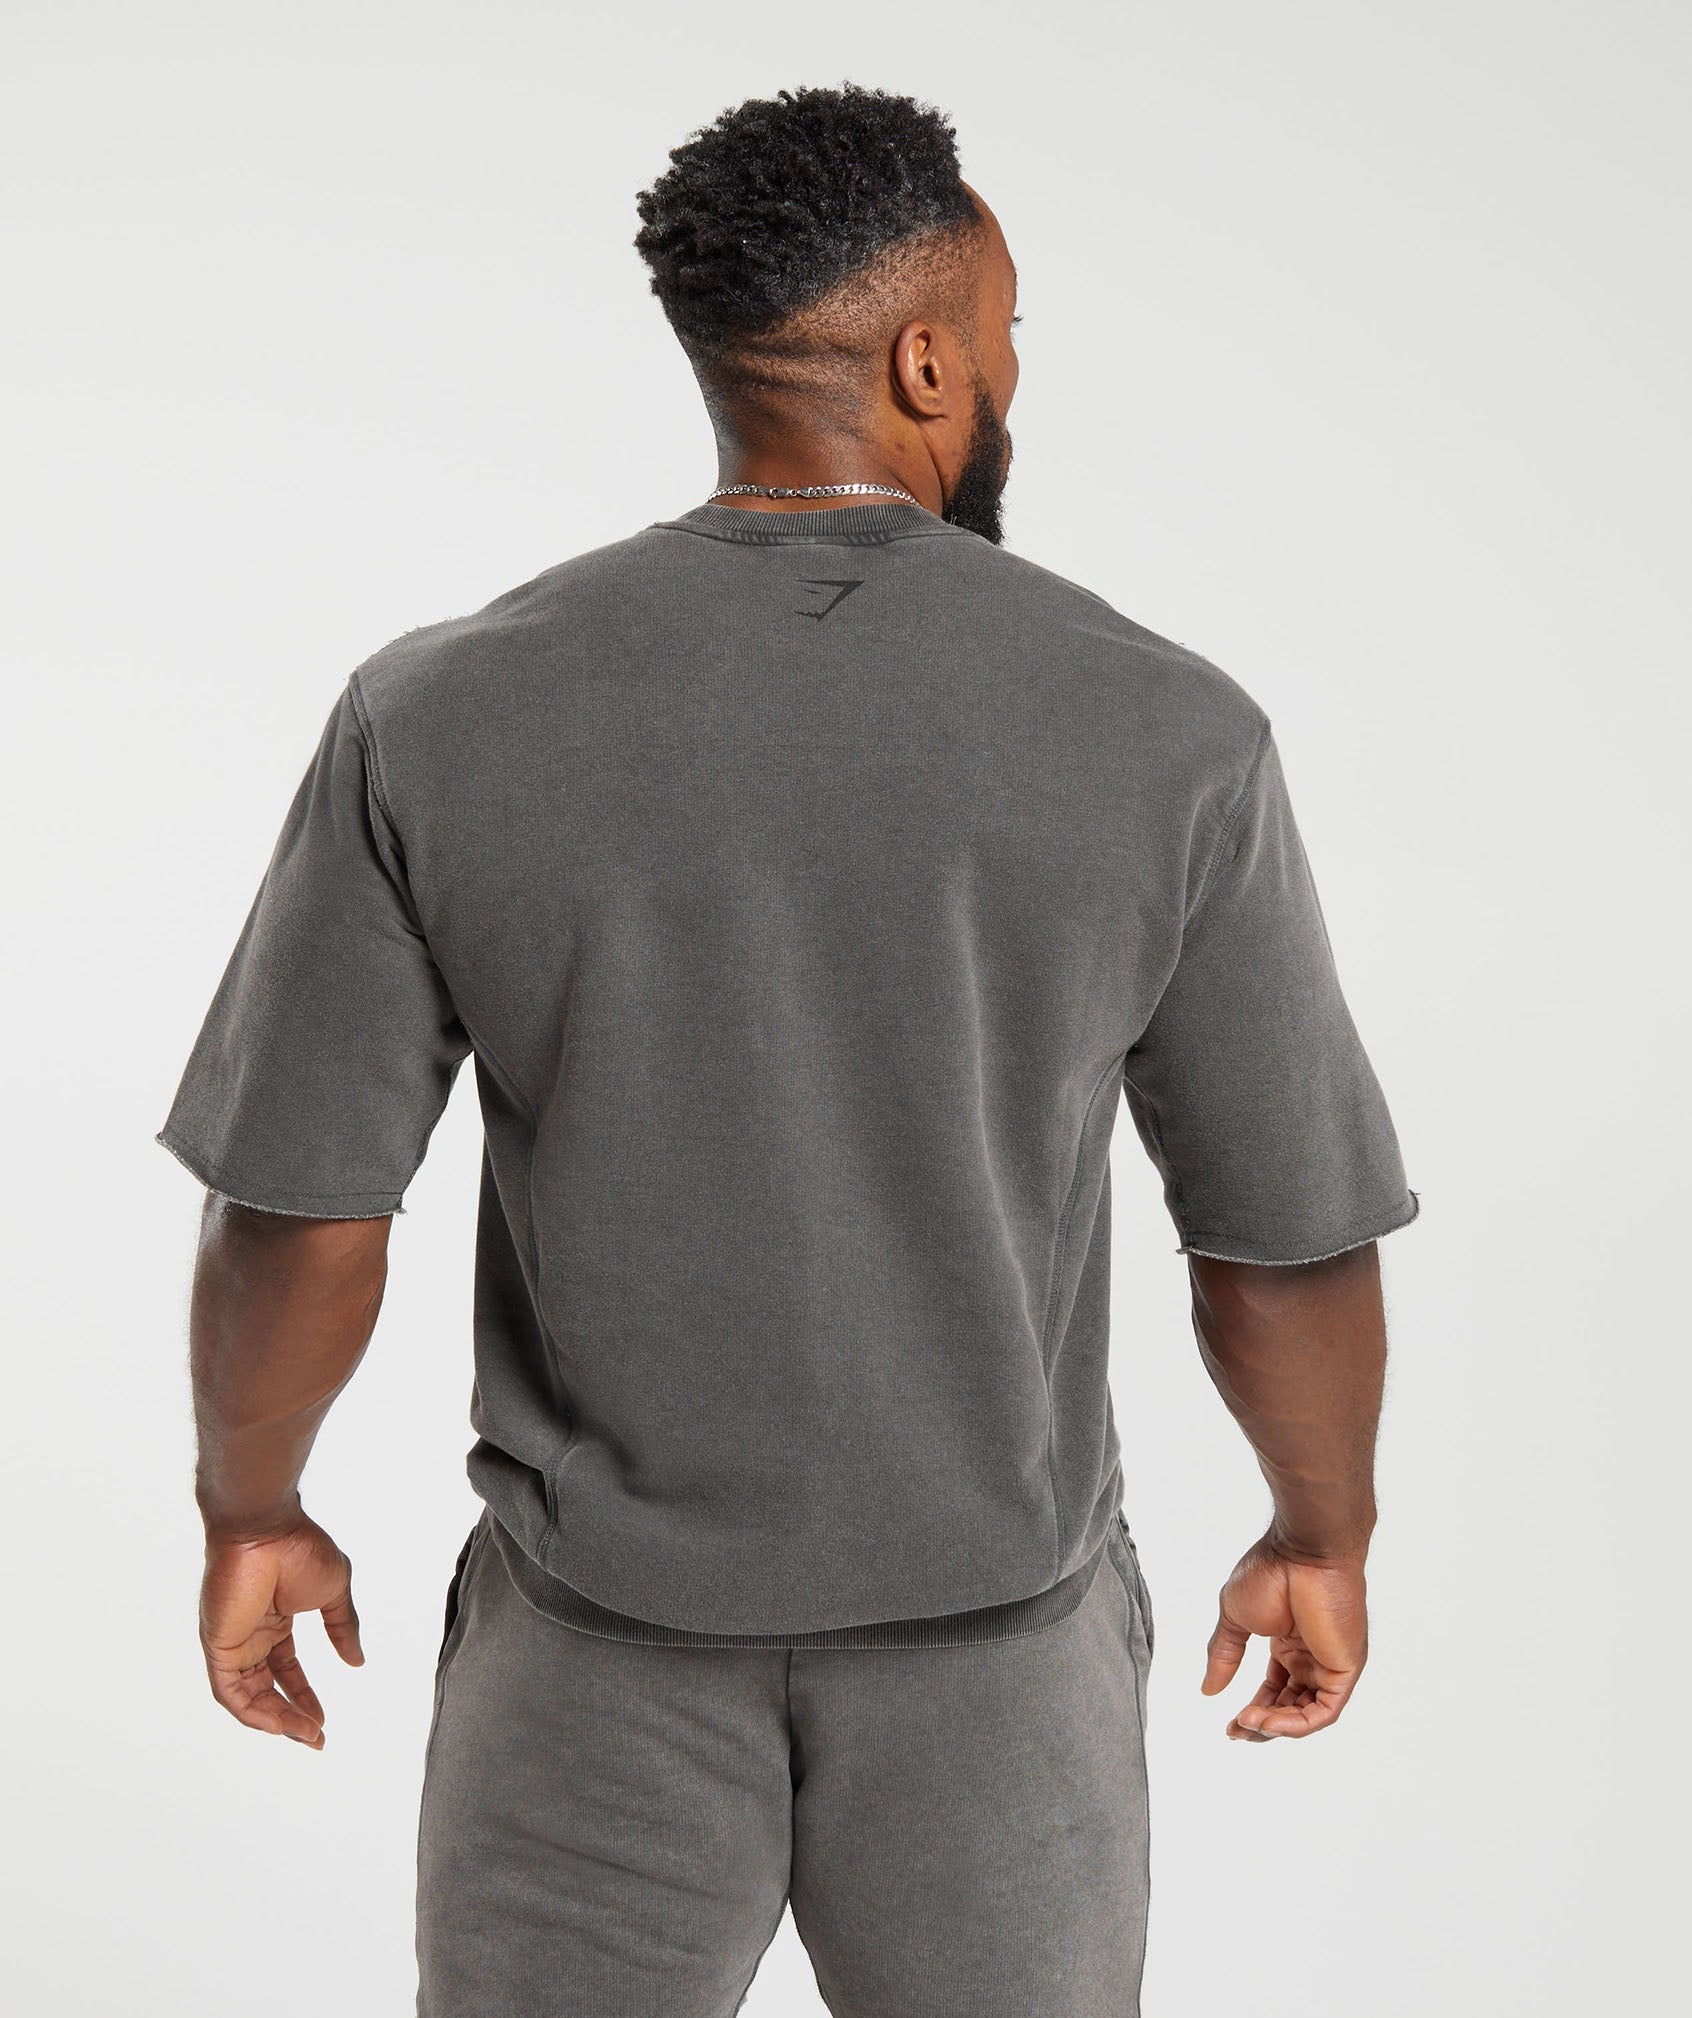 GymShark Onyx Quarter Zip Hoodie Long Sleeve Men's Size XL